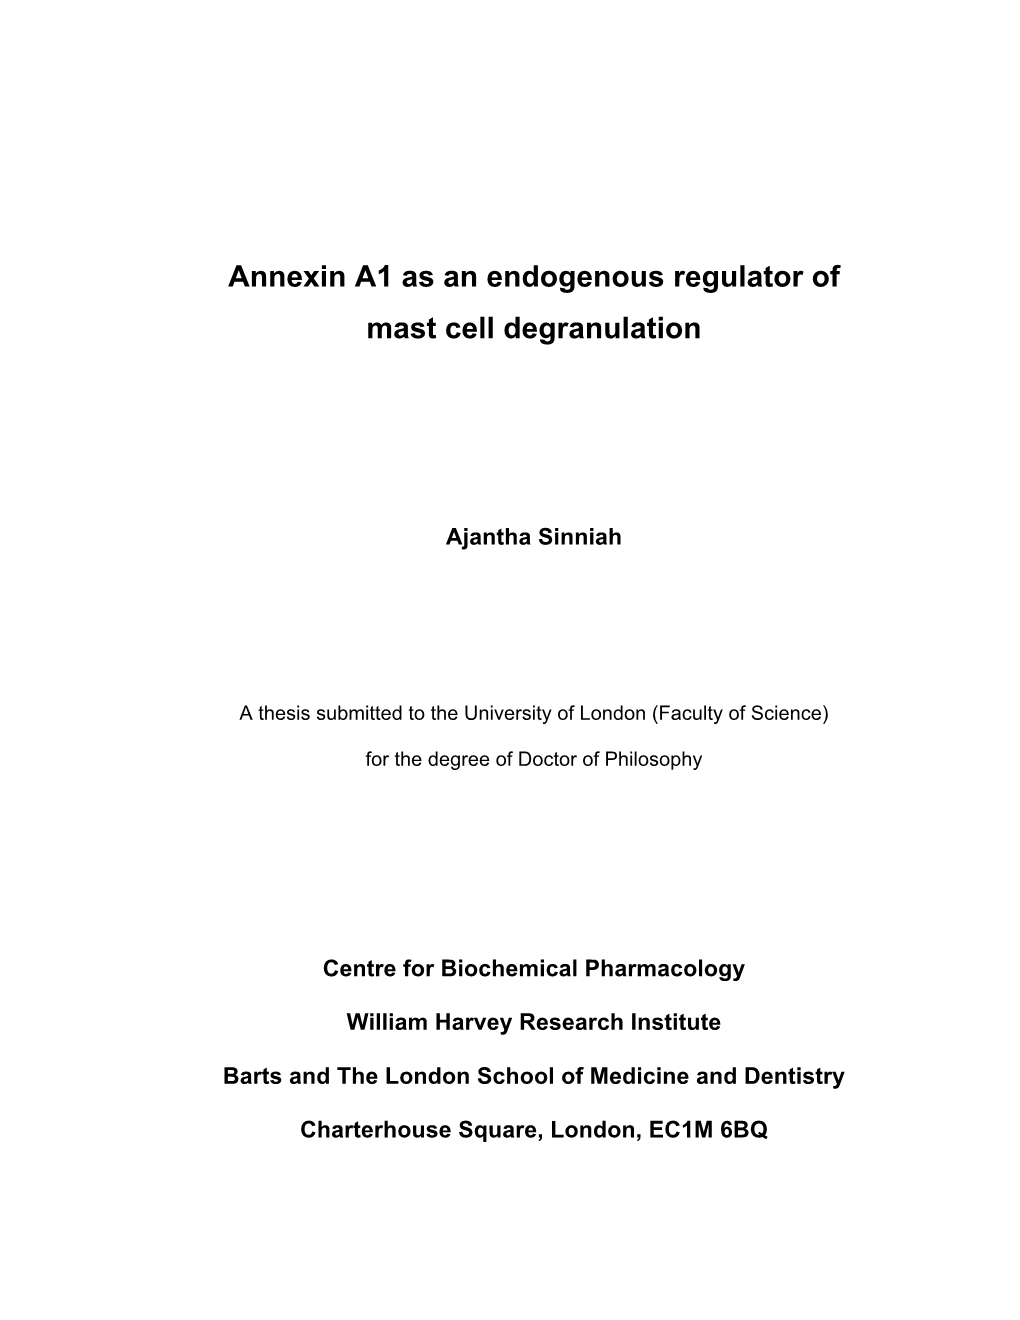 Annexin A1 As an Endogenous Regulator of Mast Cell Degranulation